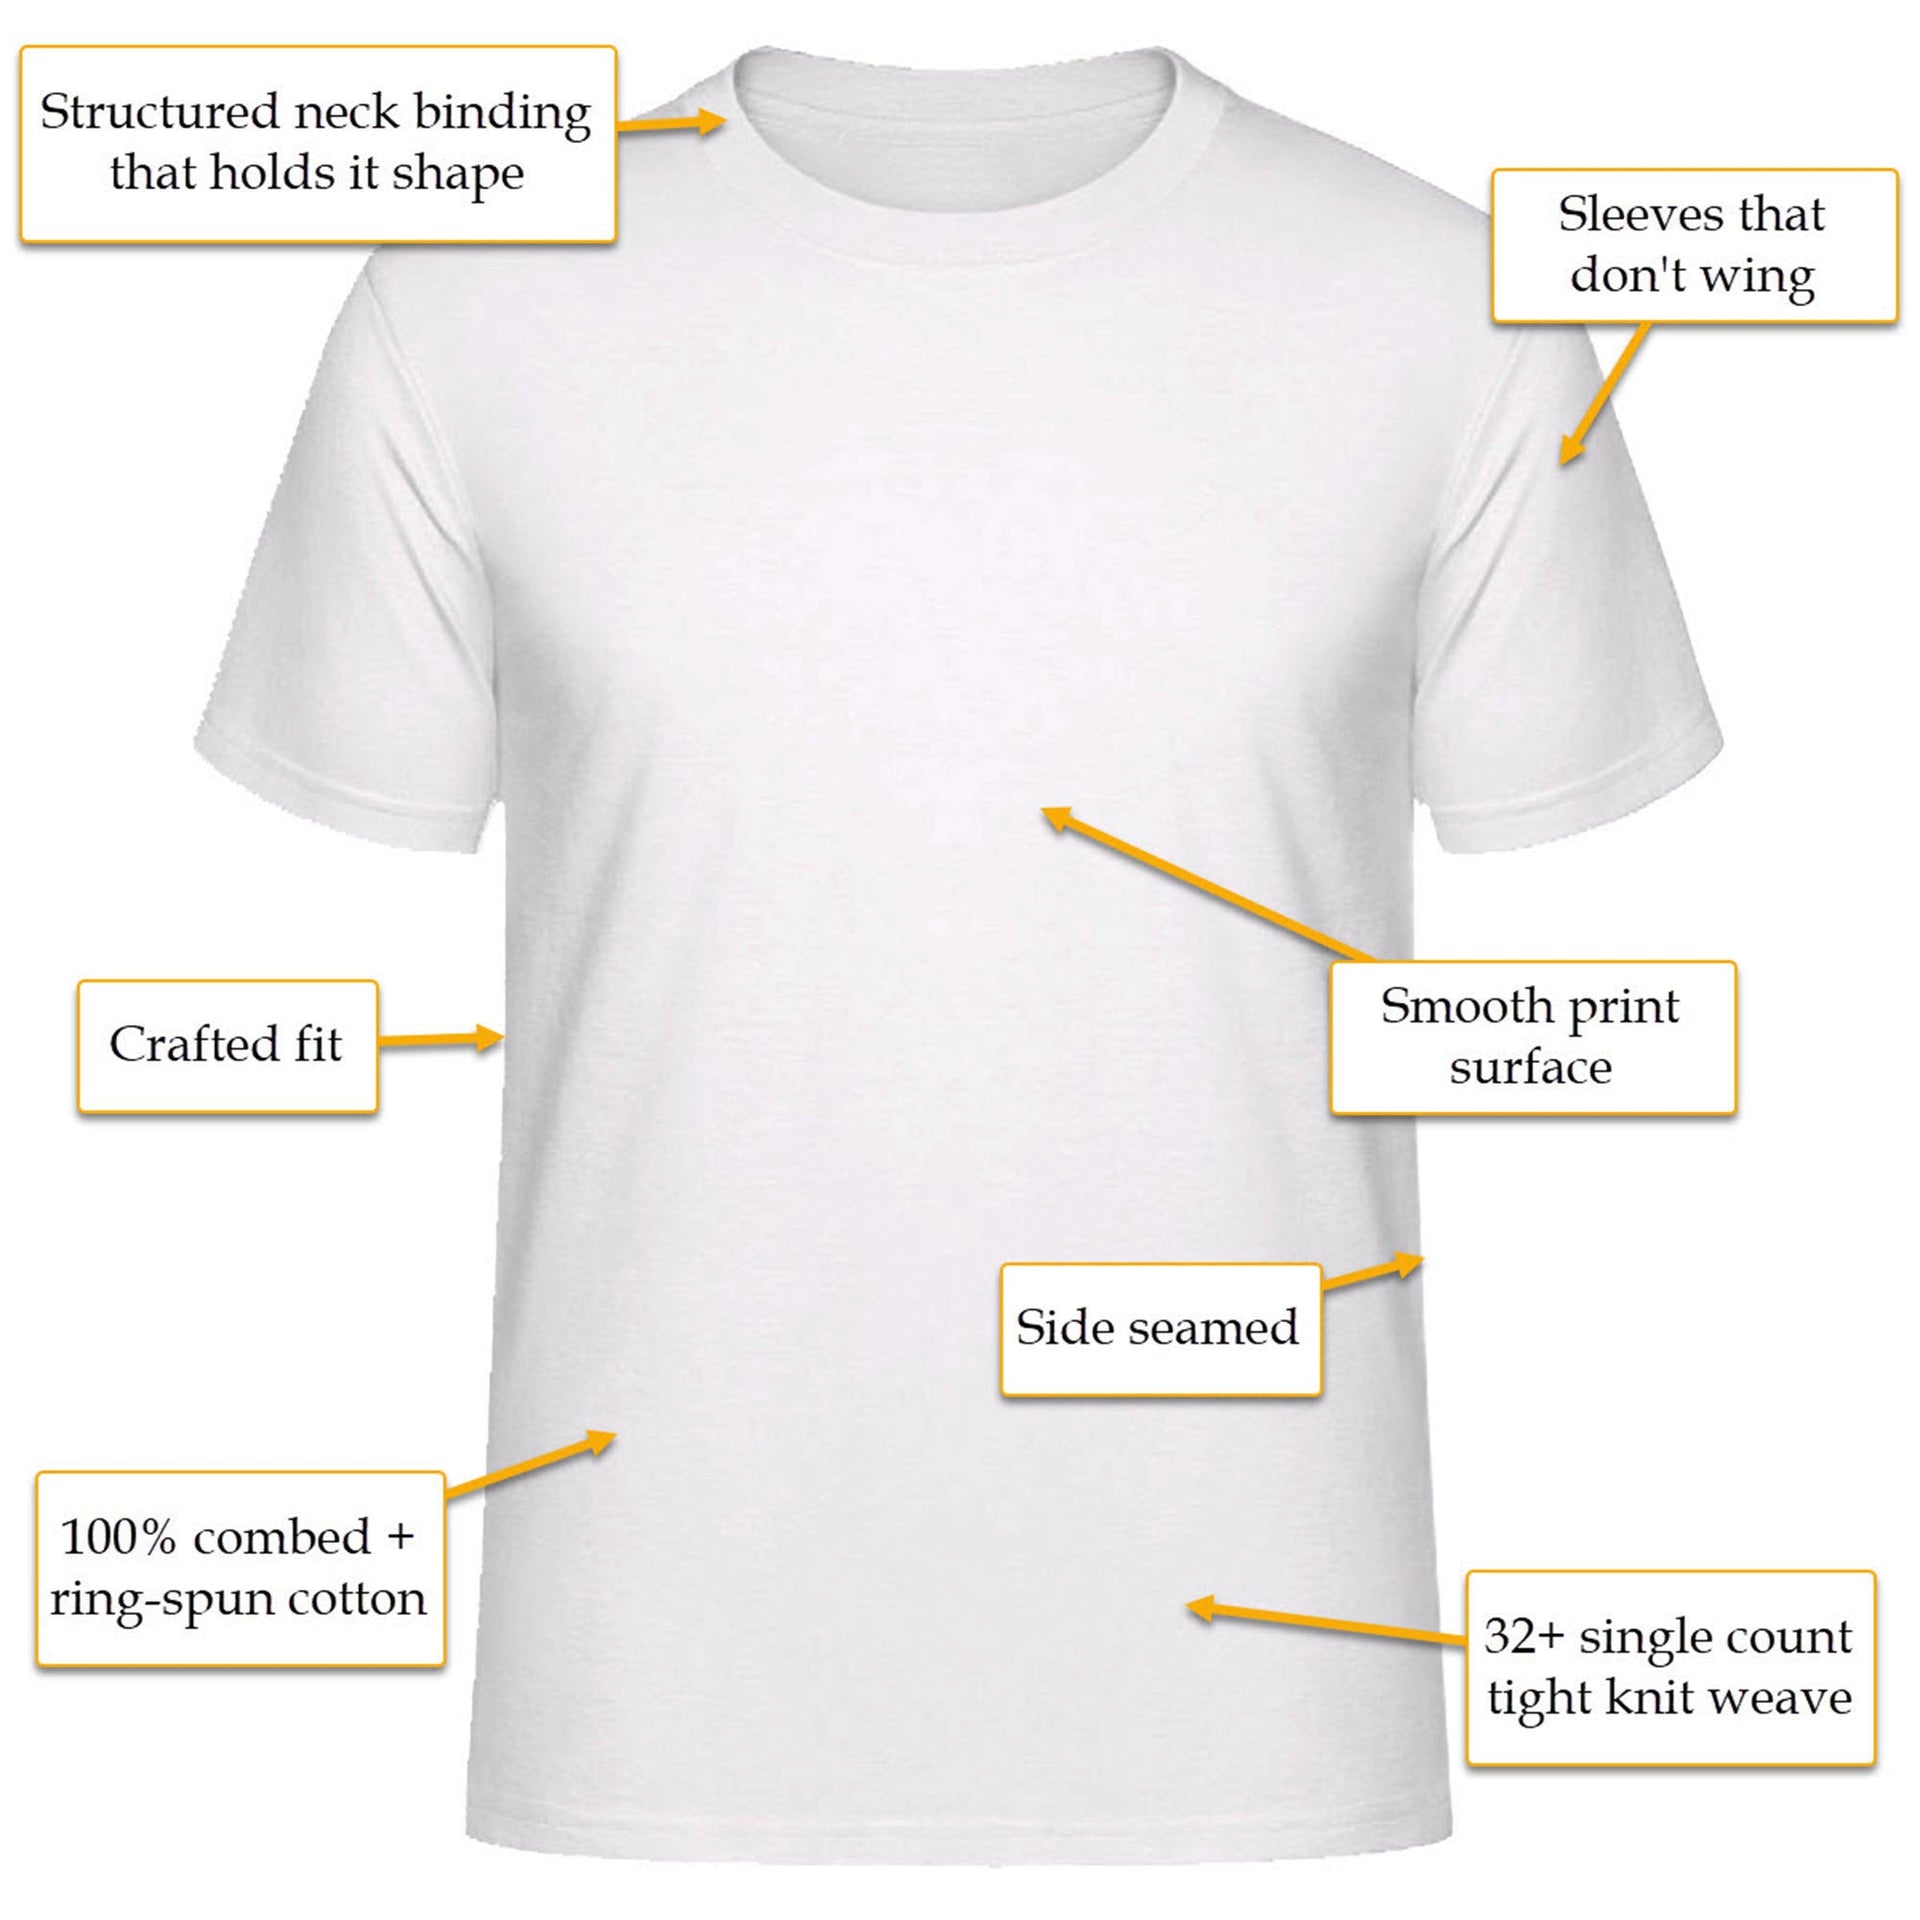 Prince Digital Portrait T-Shirt - Clothing - Harvey Ltd